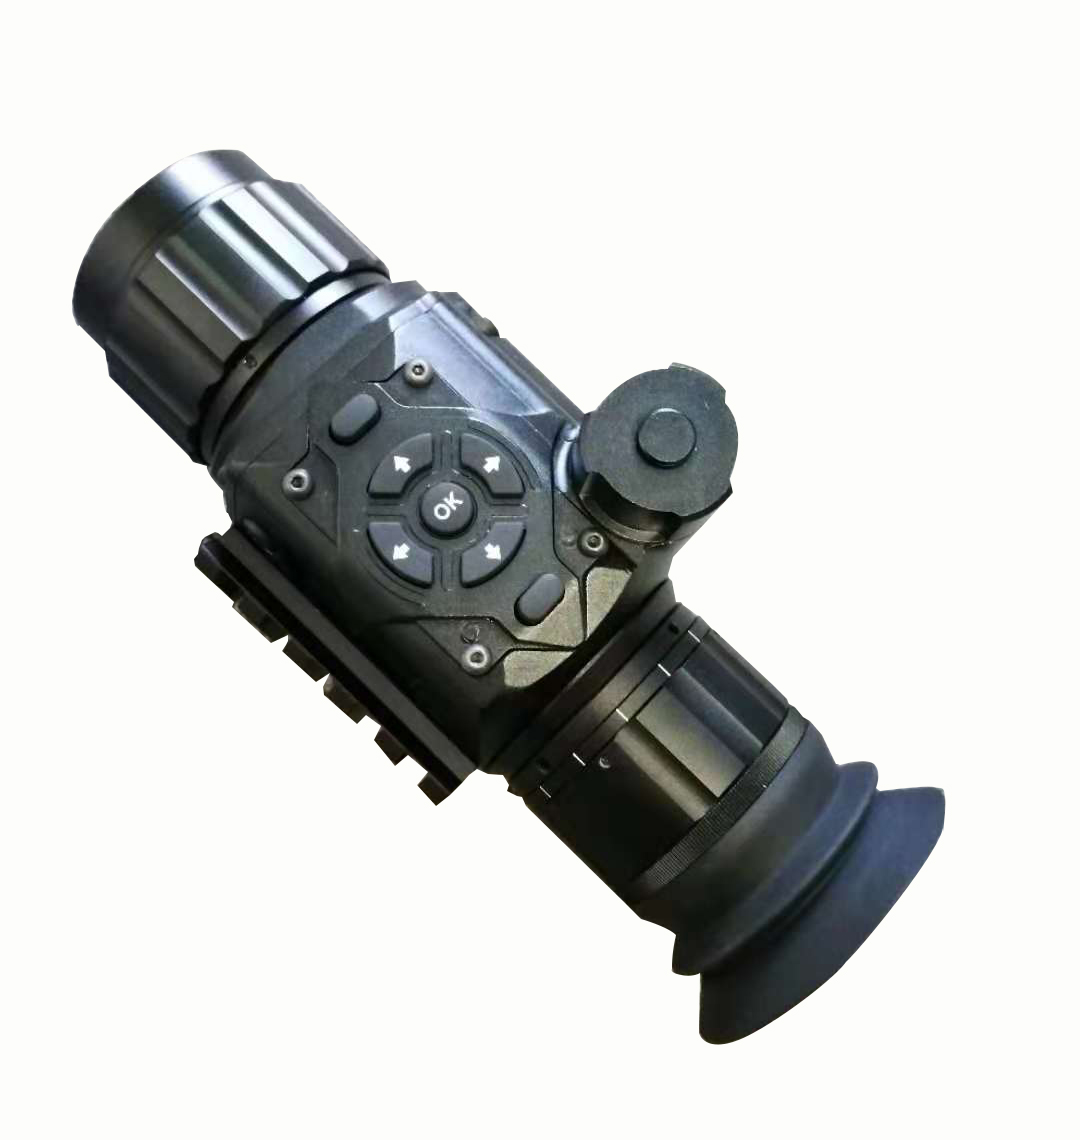 VES-R0350BL/Q 热成像瞄准镜